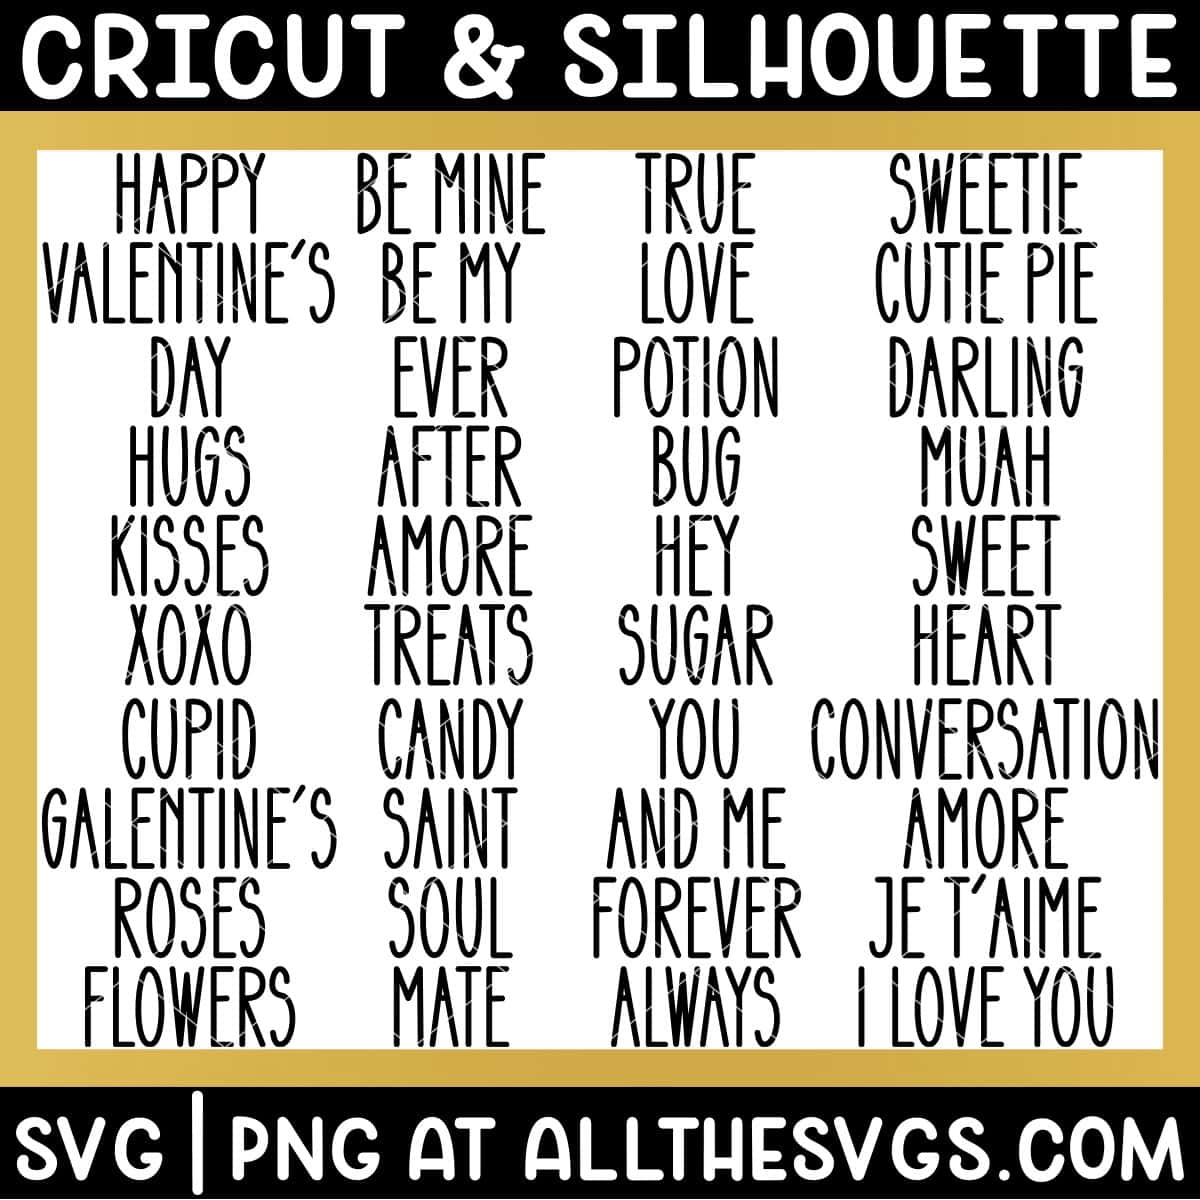 valentine's day words in popular rae dunn style handwritten caps.